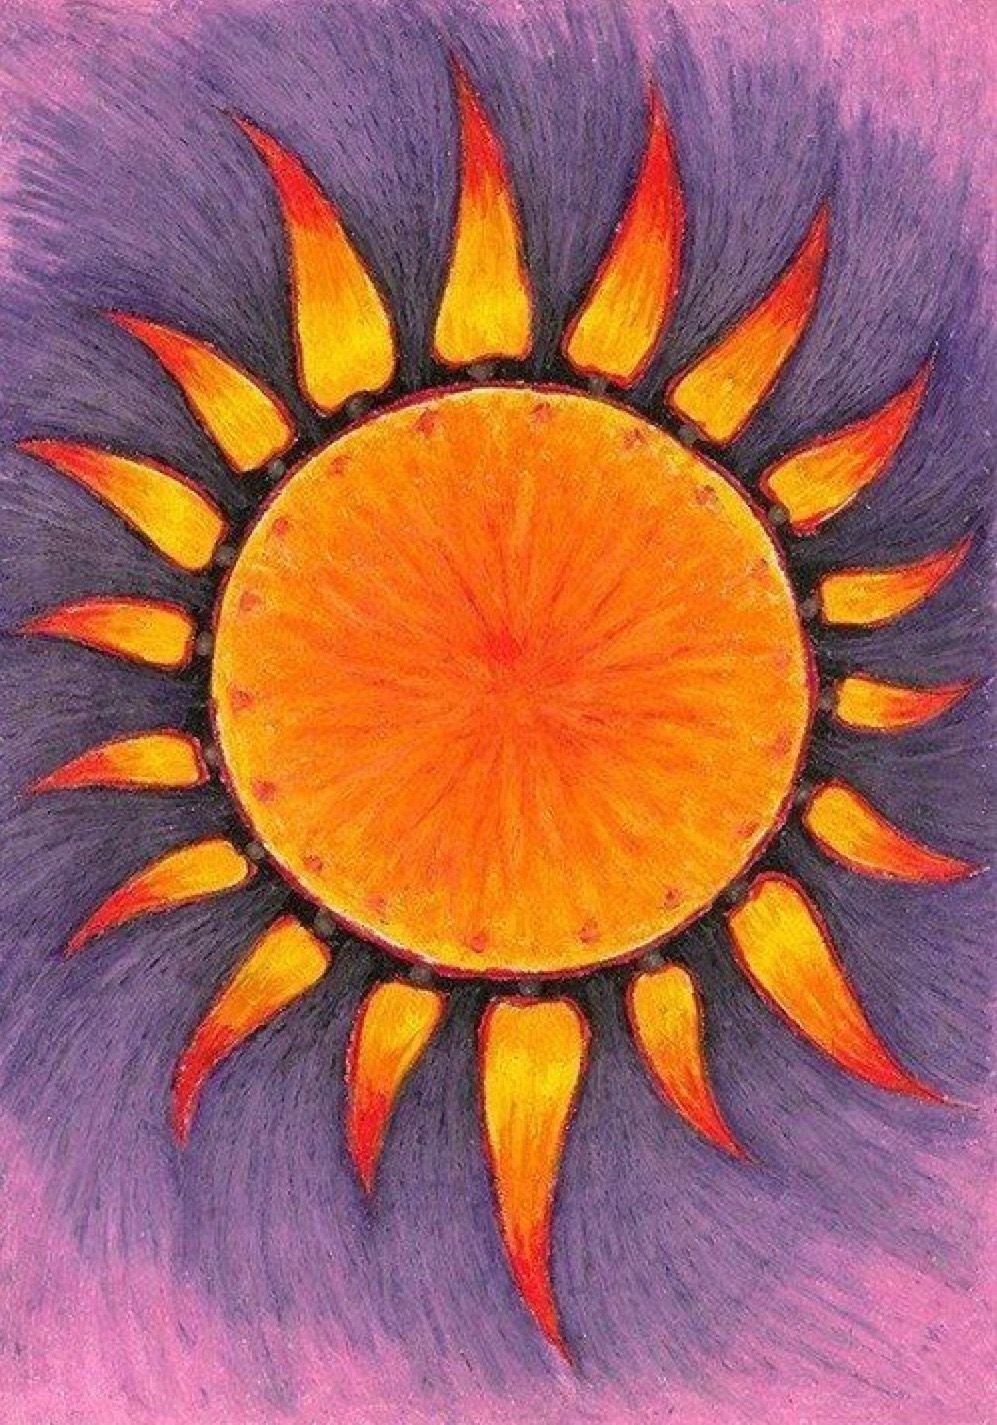 Цветное солнце. Солнце рисунок. Солнце нарисованное. Солнце риконок. Солнышко рисунок.